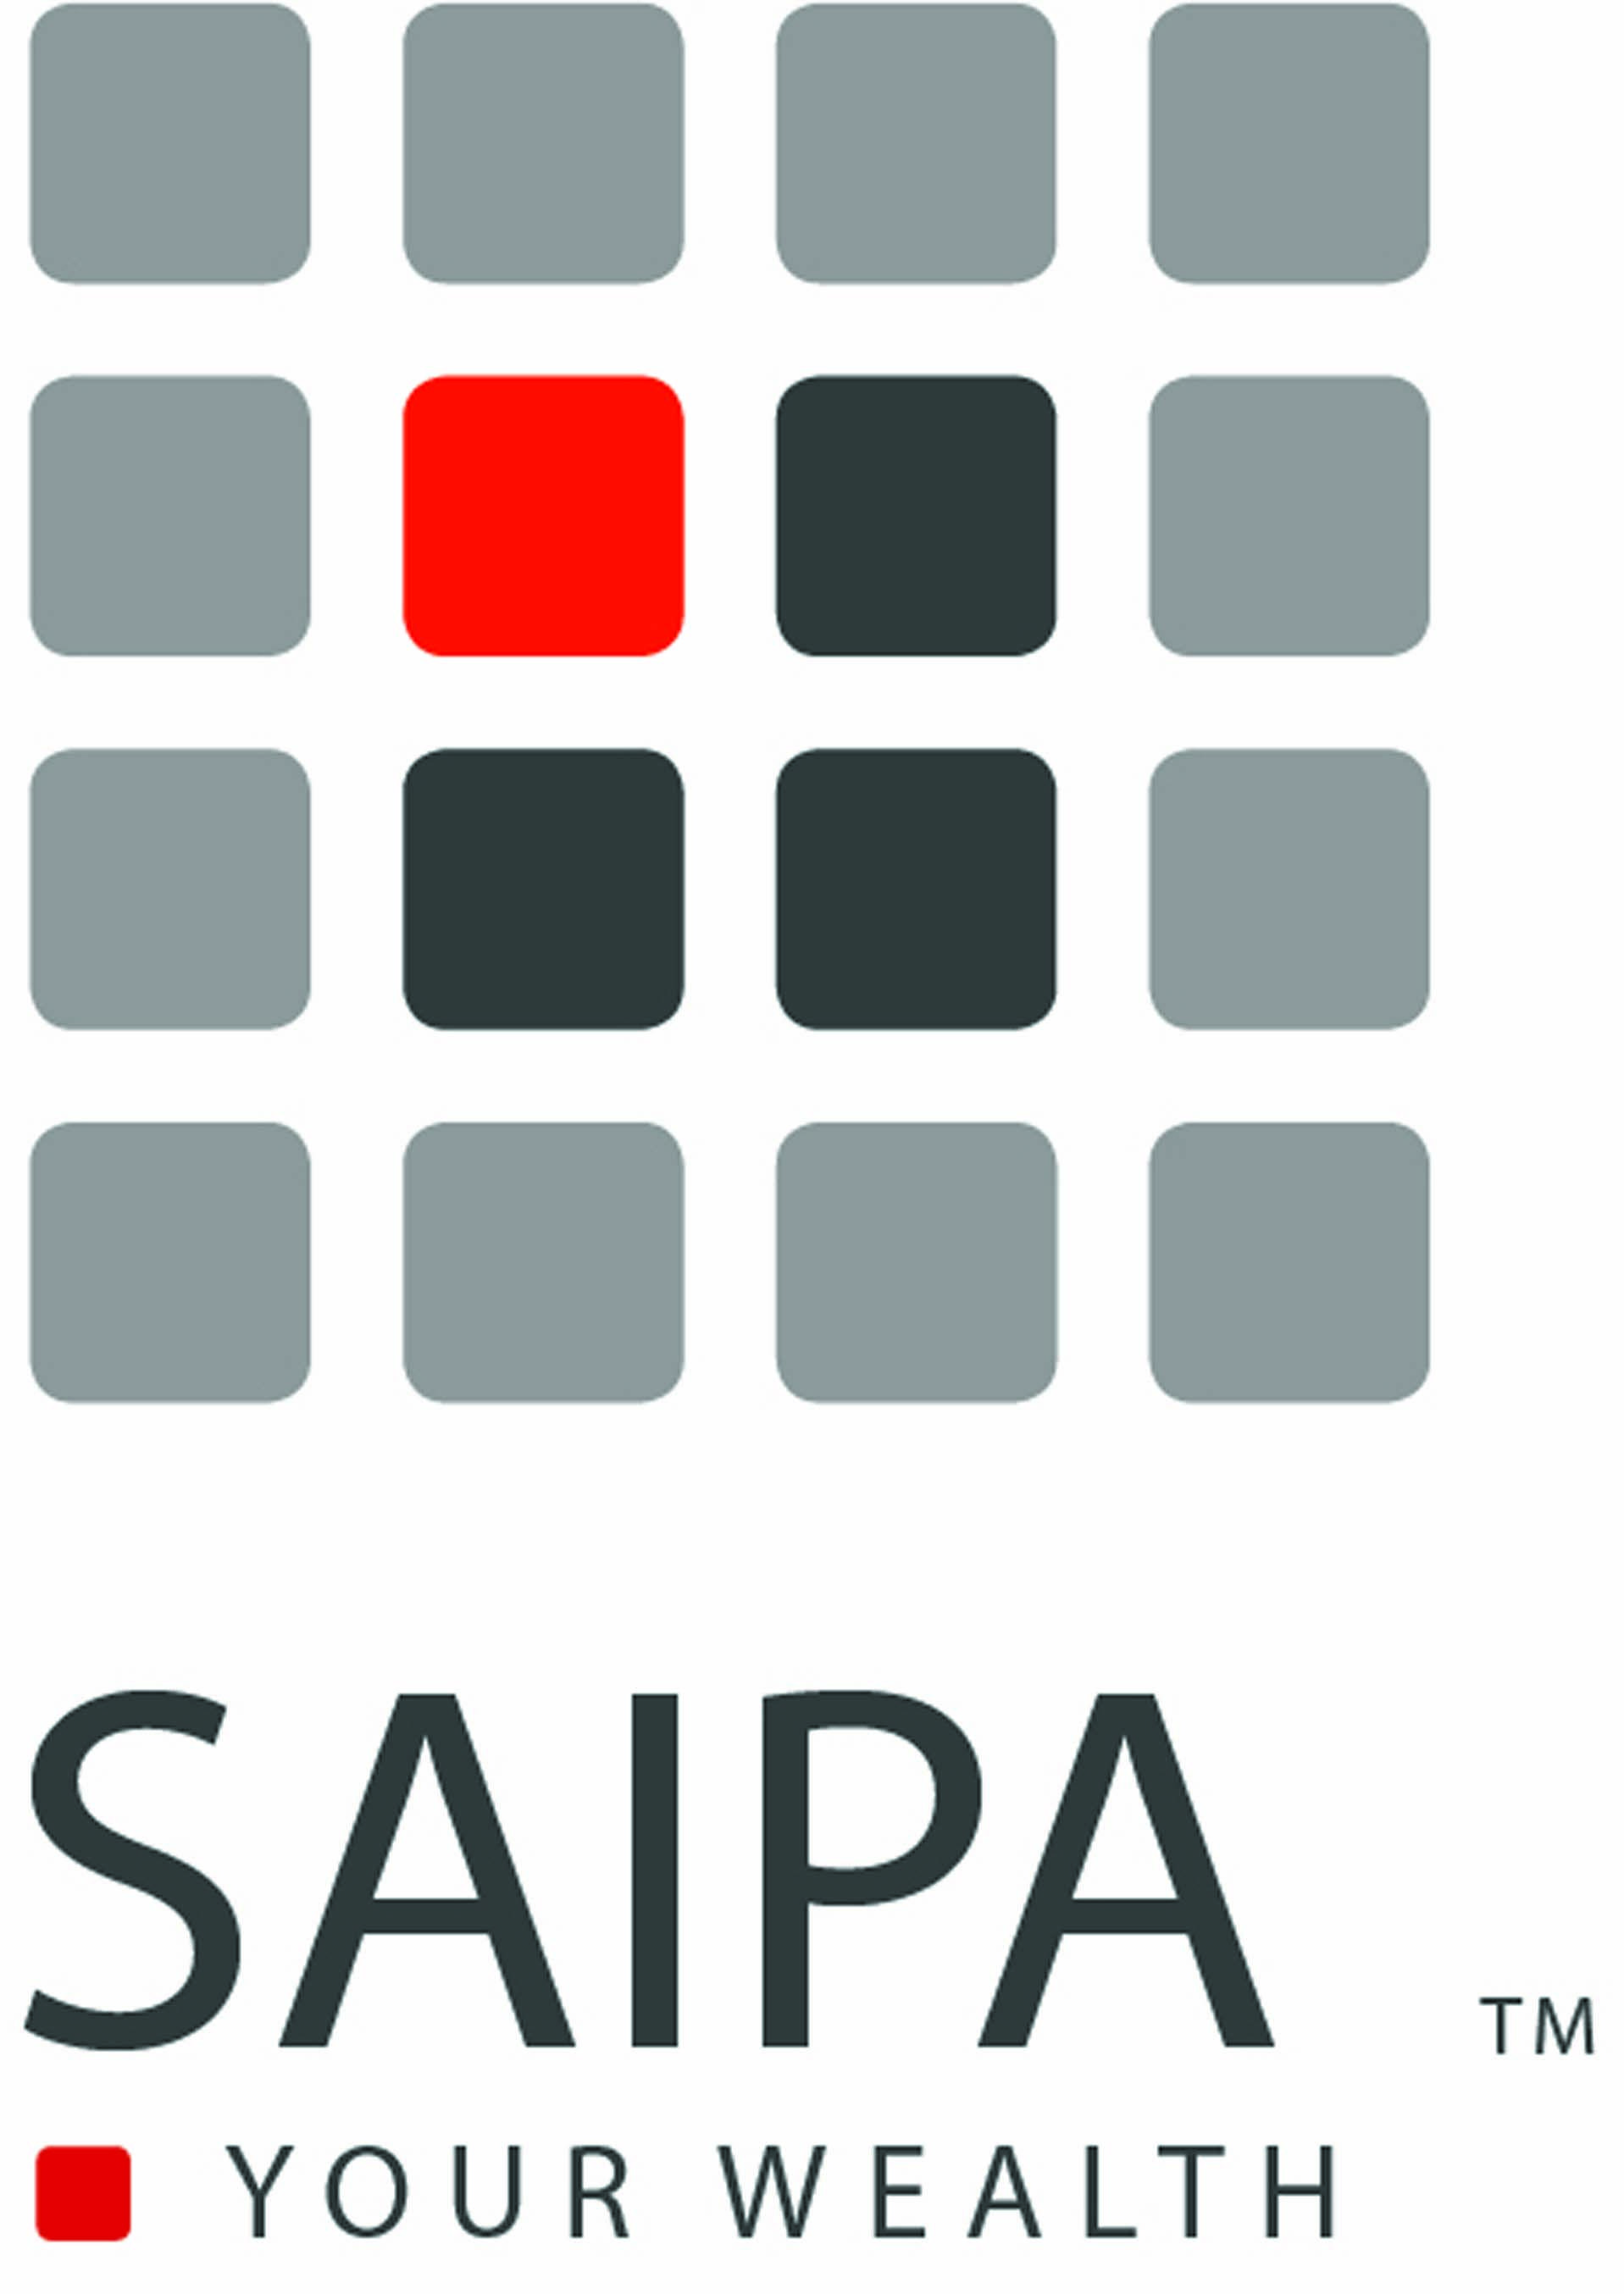 Saips Logo - LOGO DOWNLOAD - SAIPA